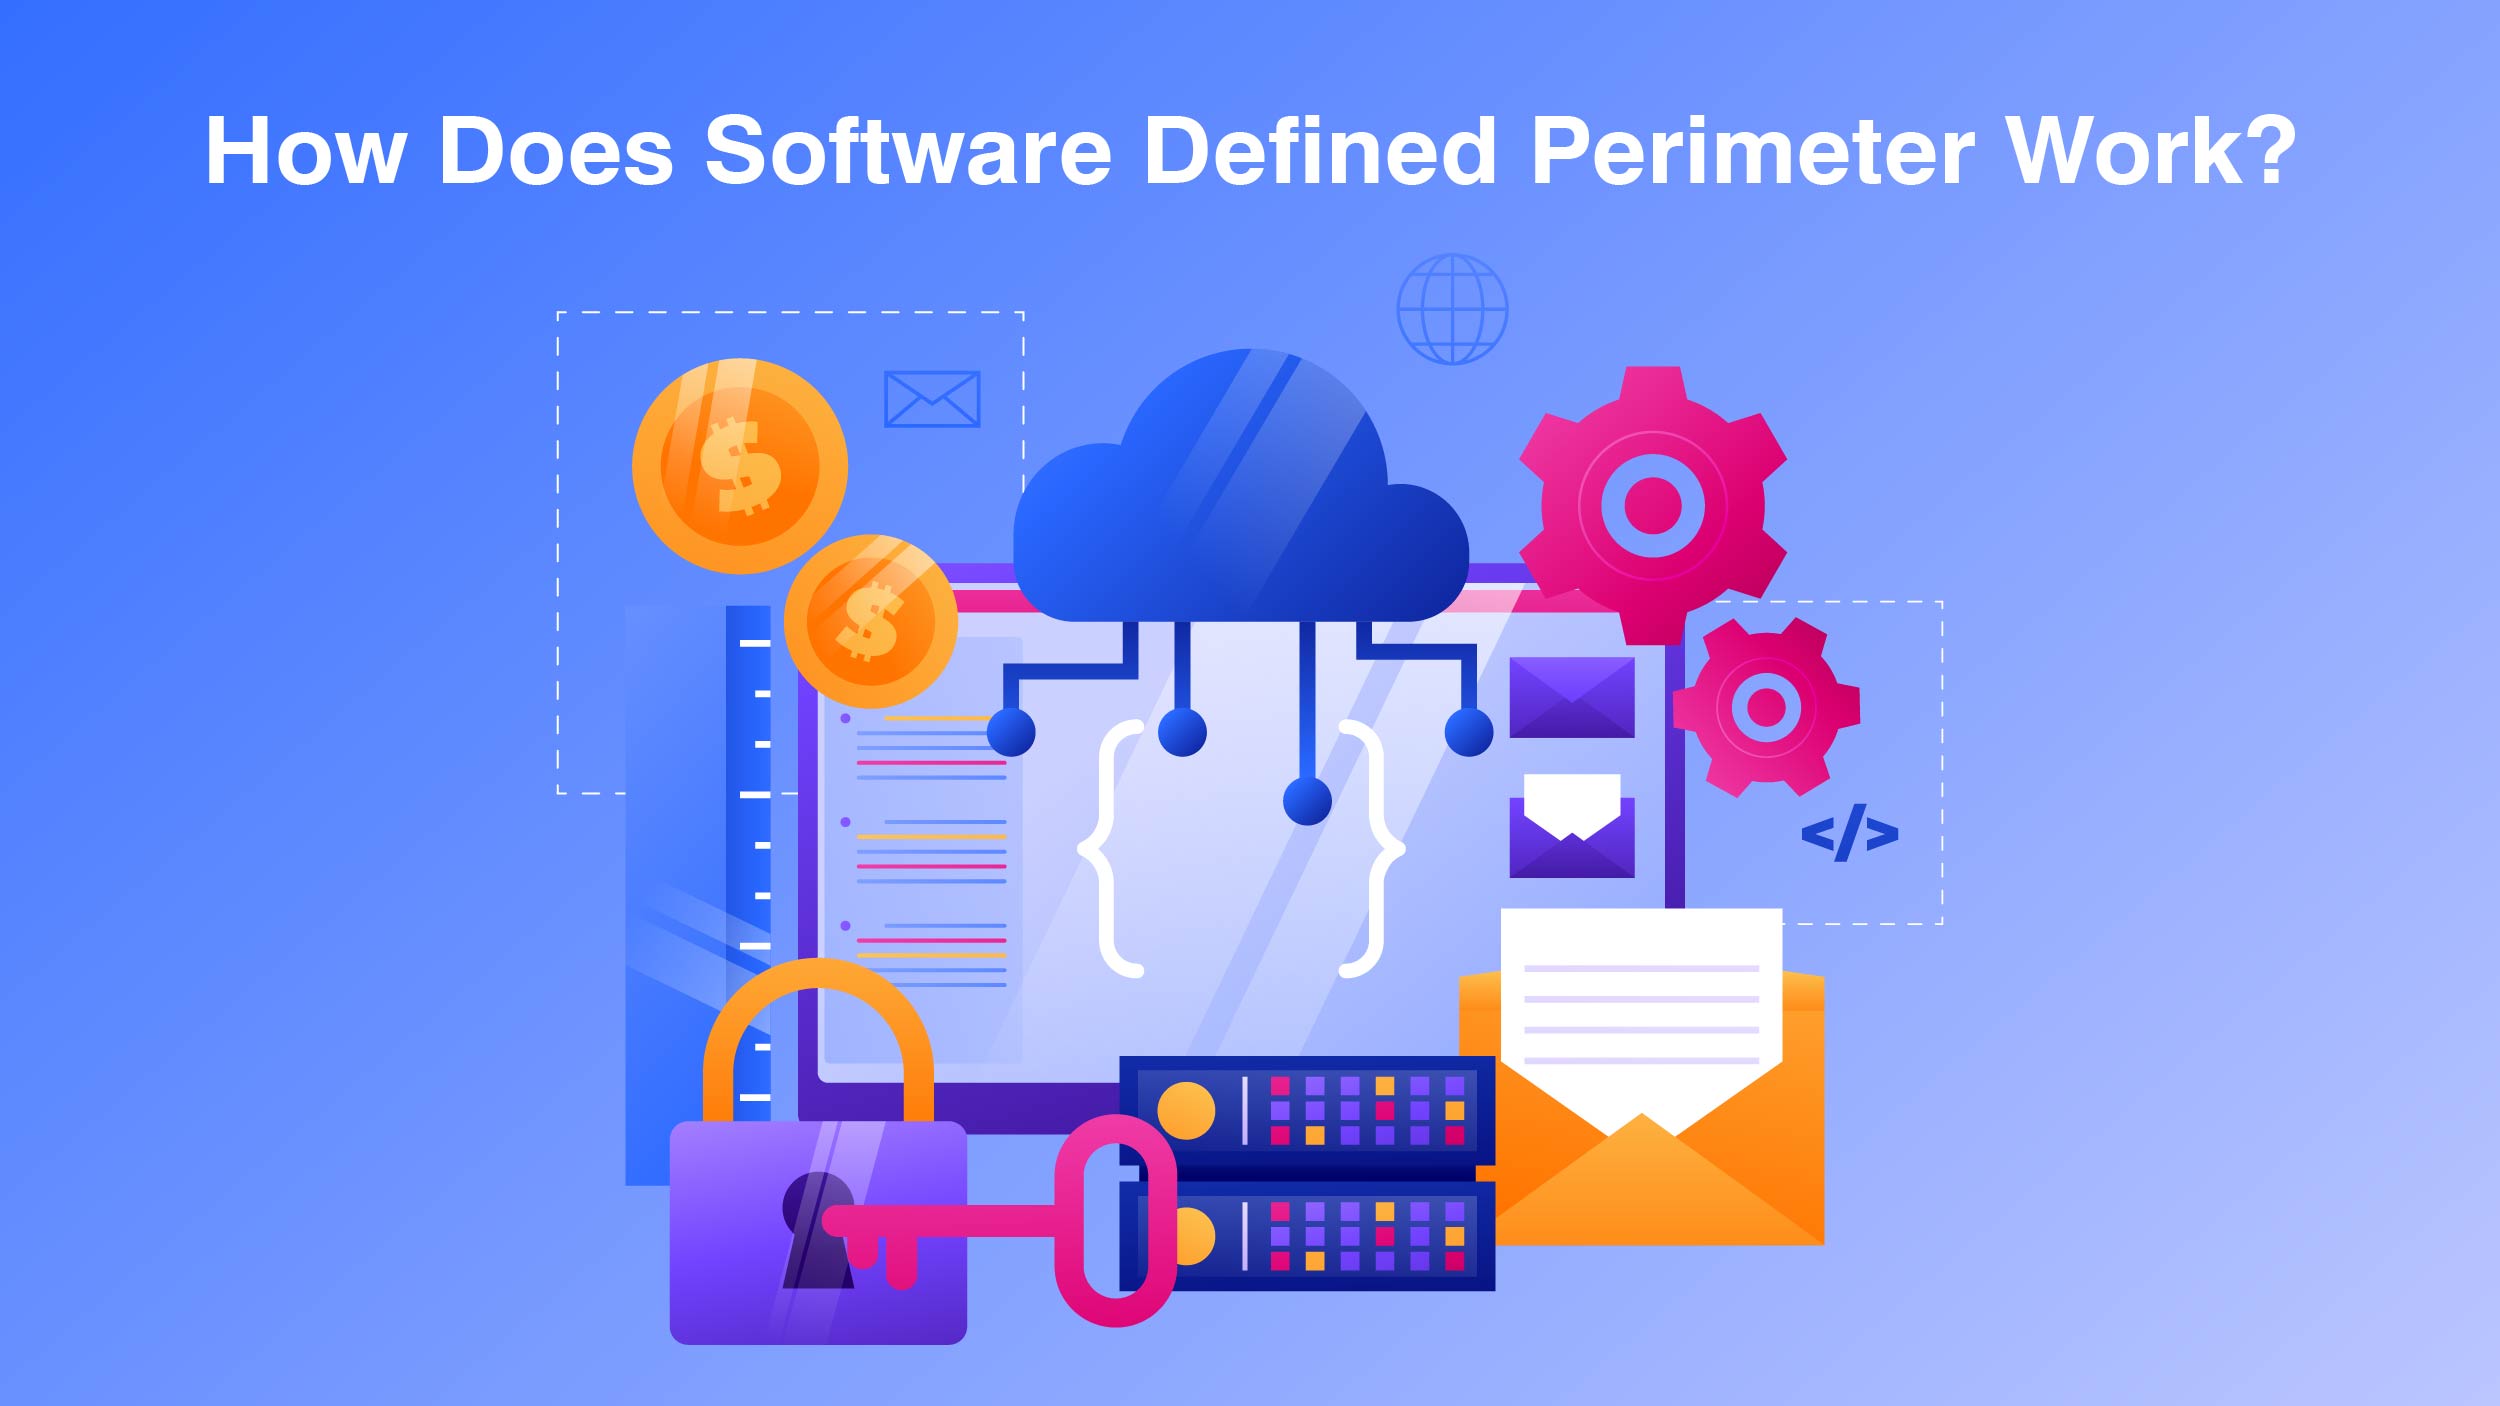 Software-defined perimeter